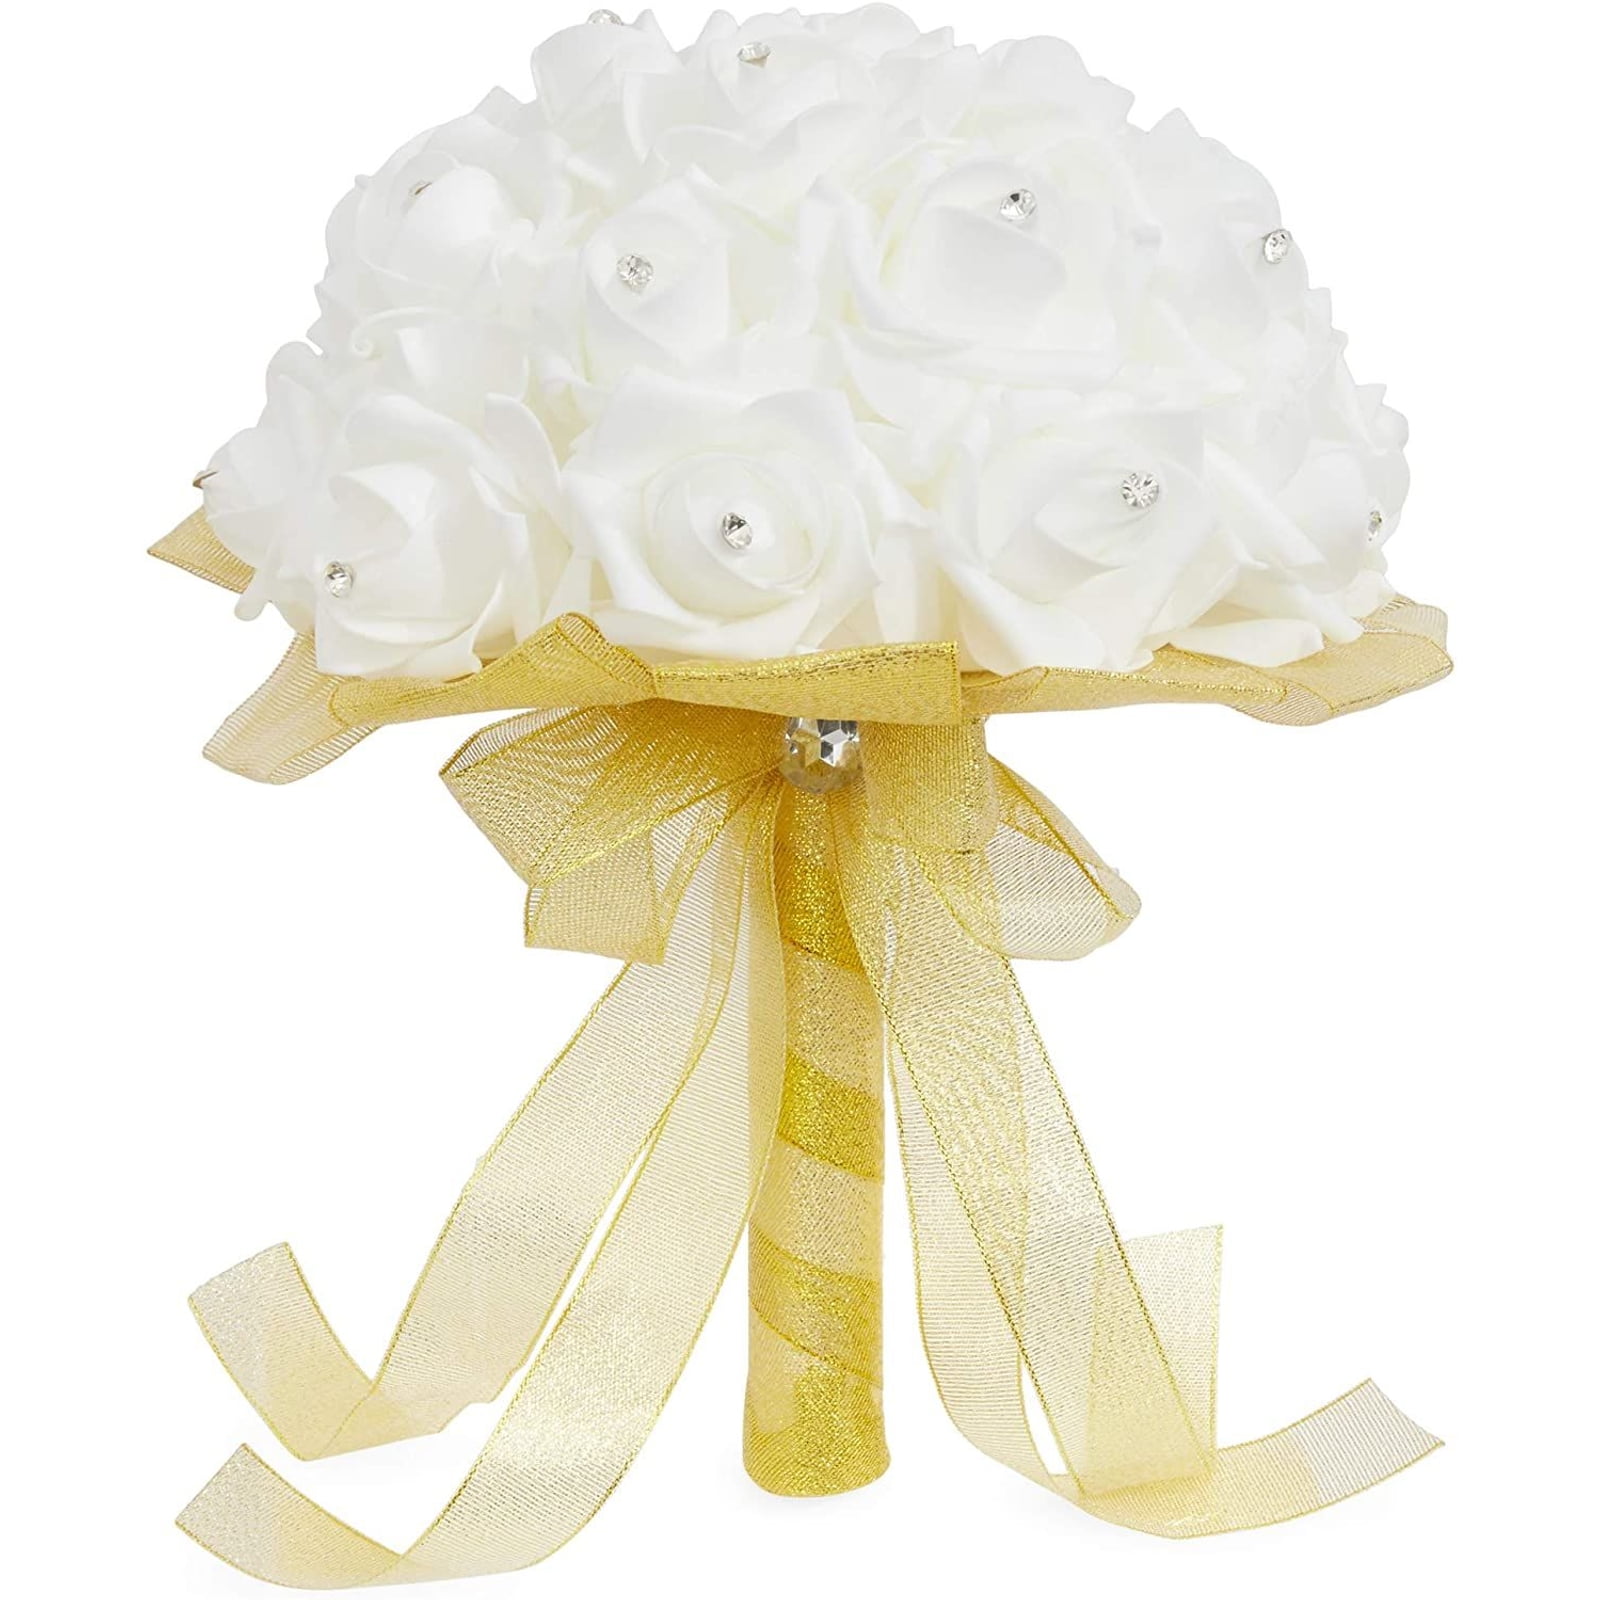 12 GOLD Leather Fern Stems Fronds Greenery Silk Wedding Flowers Centerpieces 